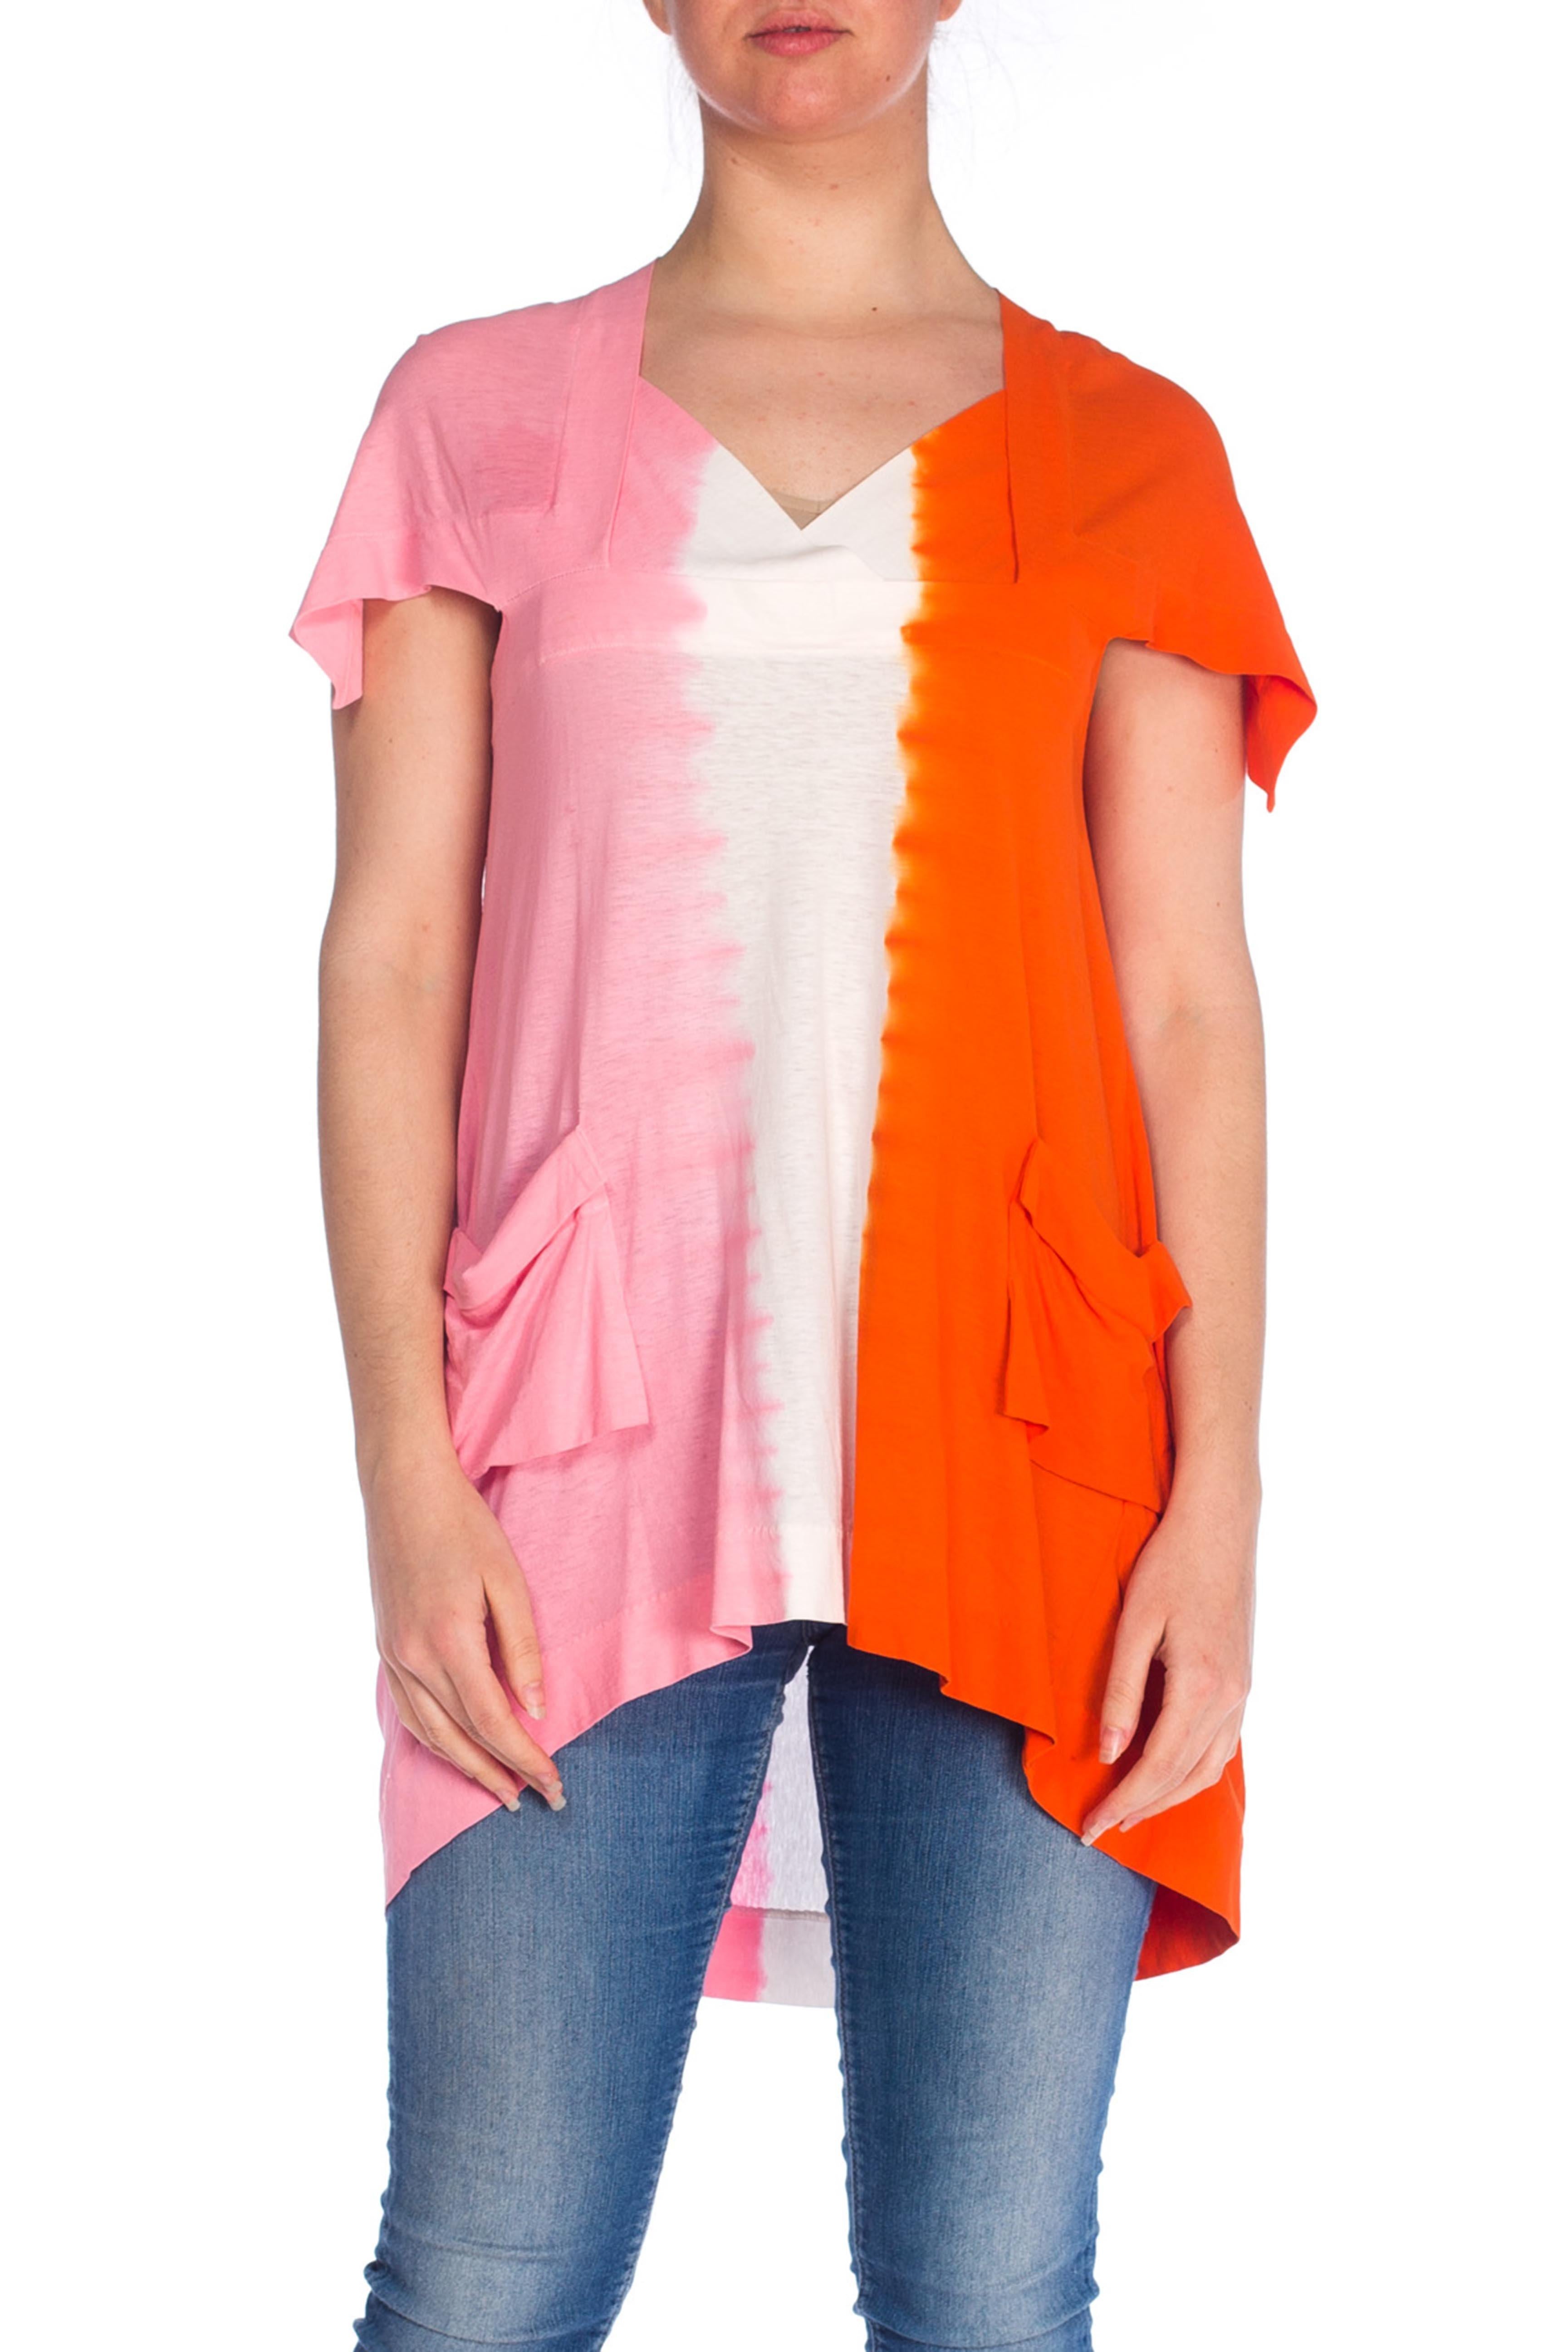 2000S BERNARD WILLHELM Pink & Orange Cotton Jersey Tie Dye Tunic Top